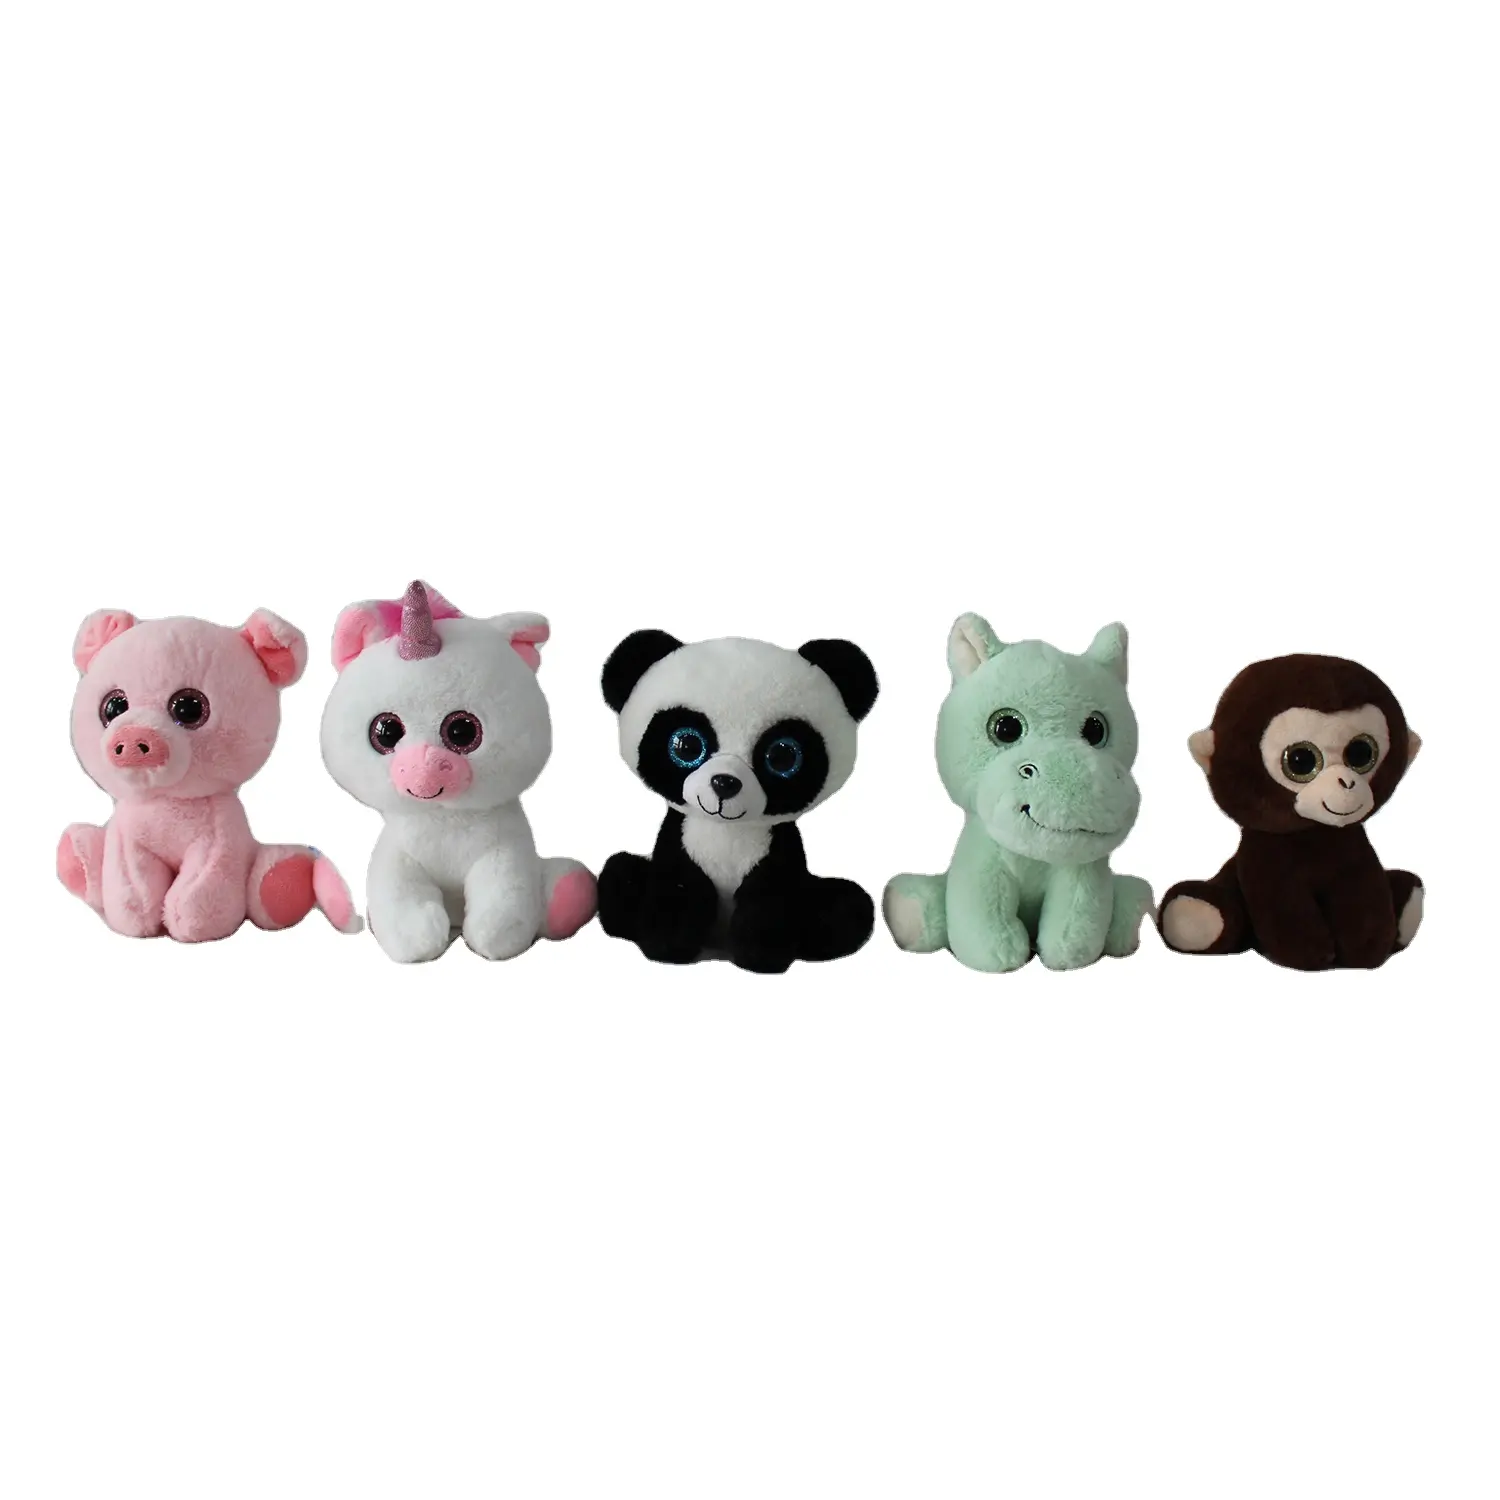 Soft Plush Toy Custom Adorable Stuffed Animal Pig Unicorn Panda Hippo Monkey Plush Dolls Toys for Boy and Girls Children Gifts